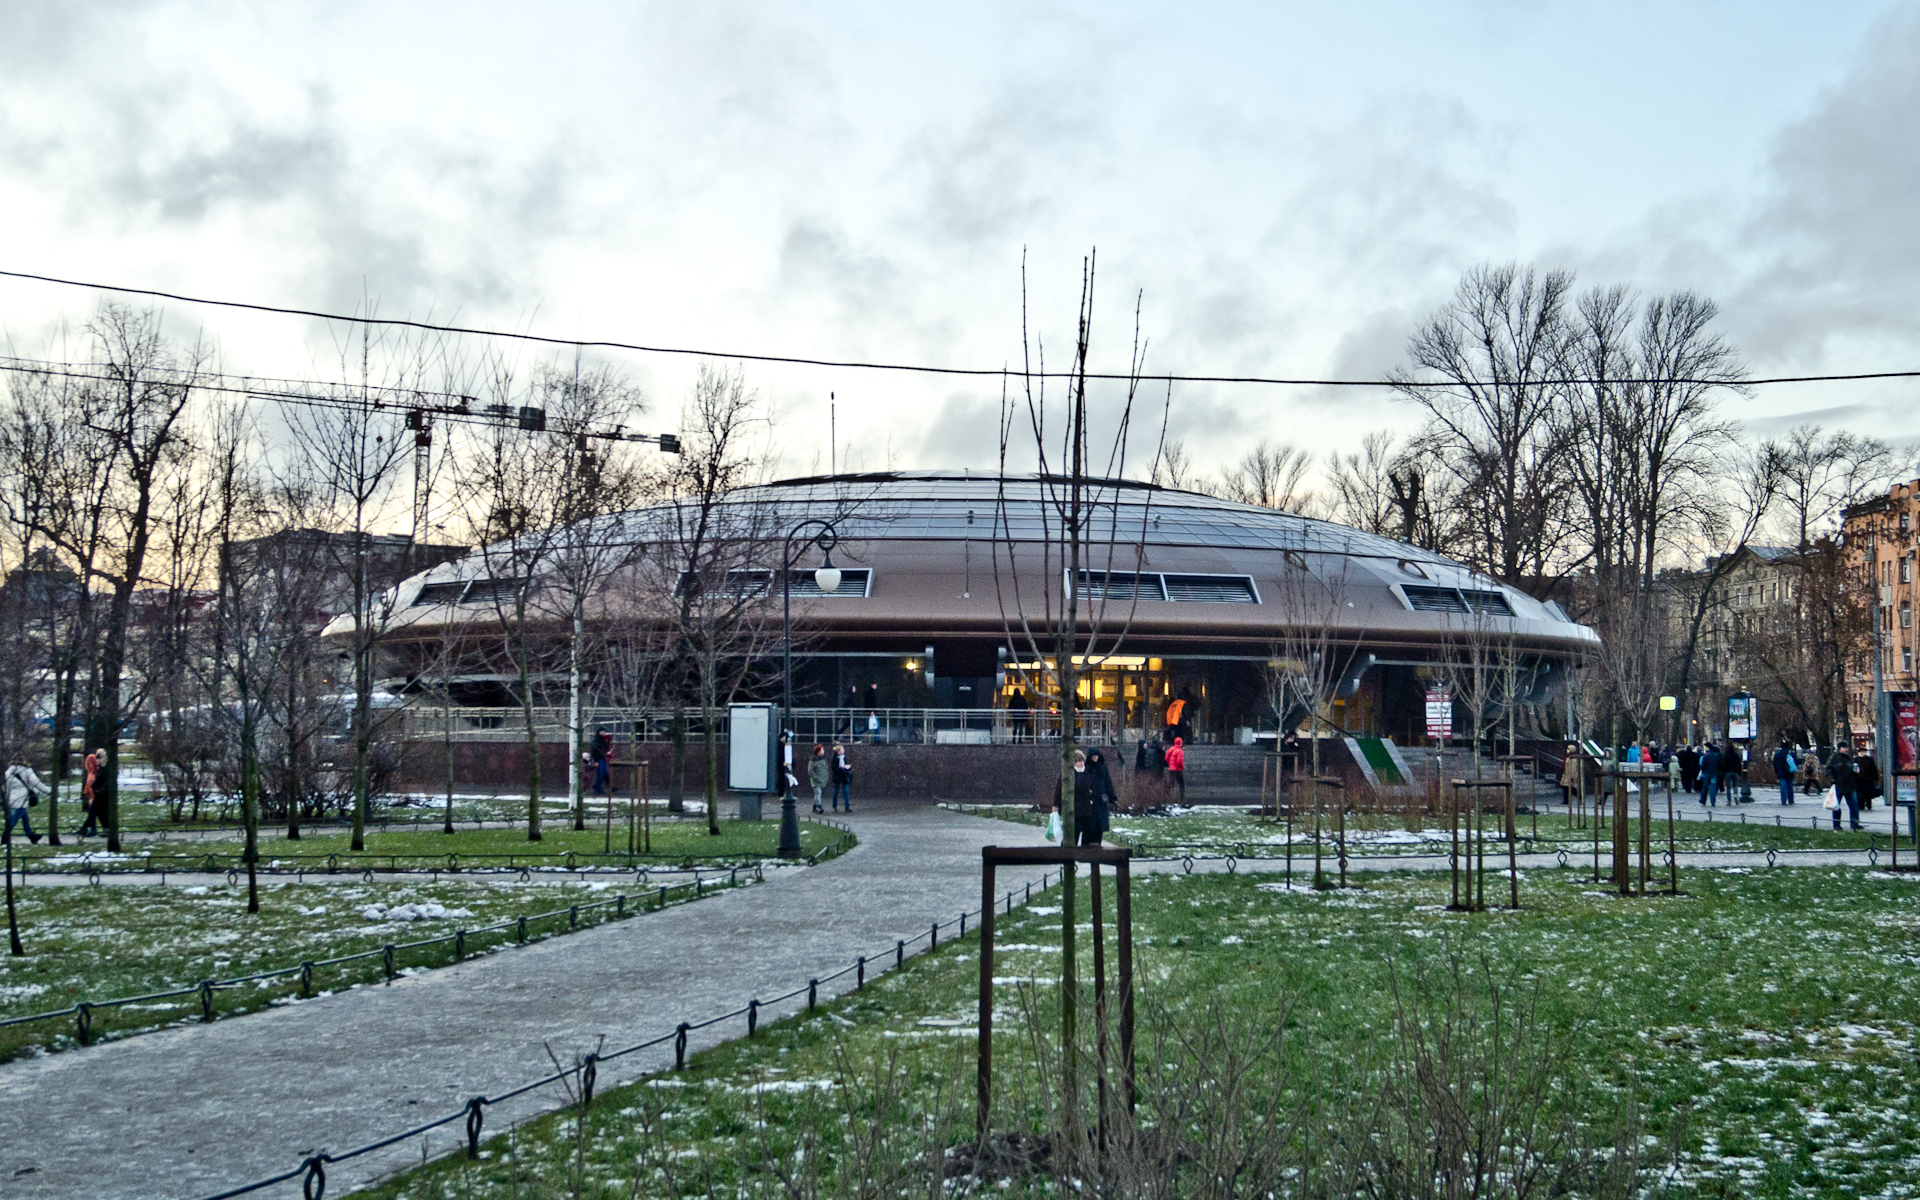 Gorkovskaya Metro Station. Image Florestein/Wikipedia under a CC license 